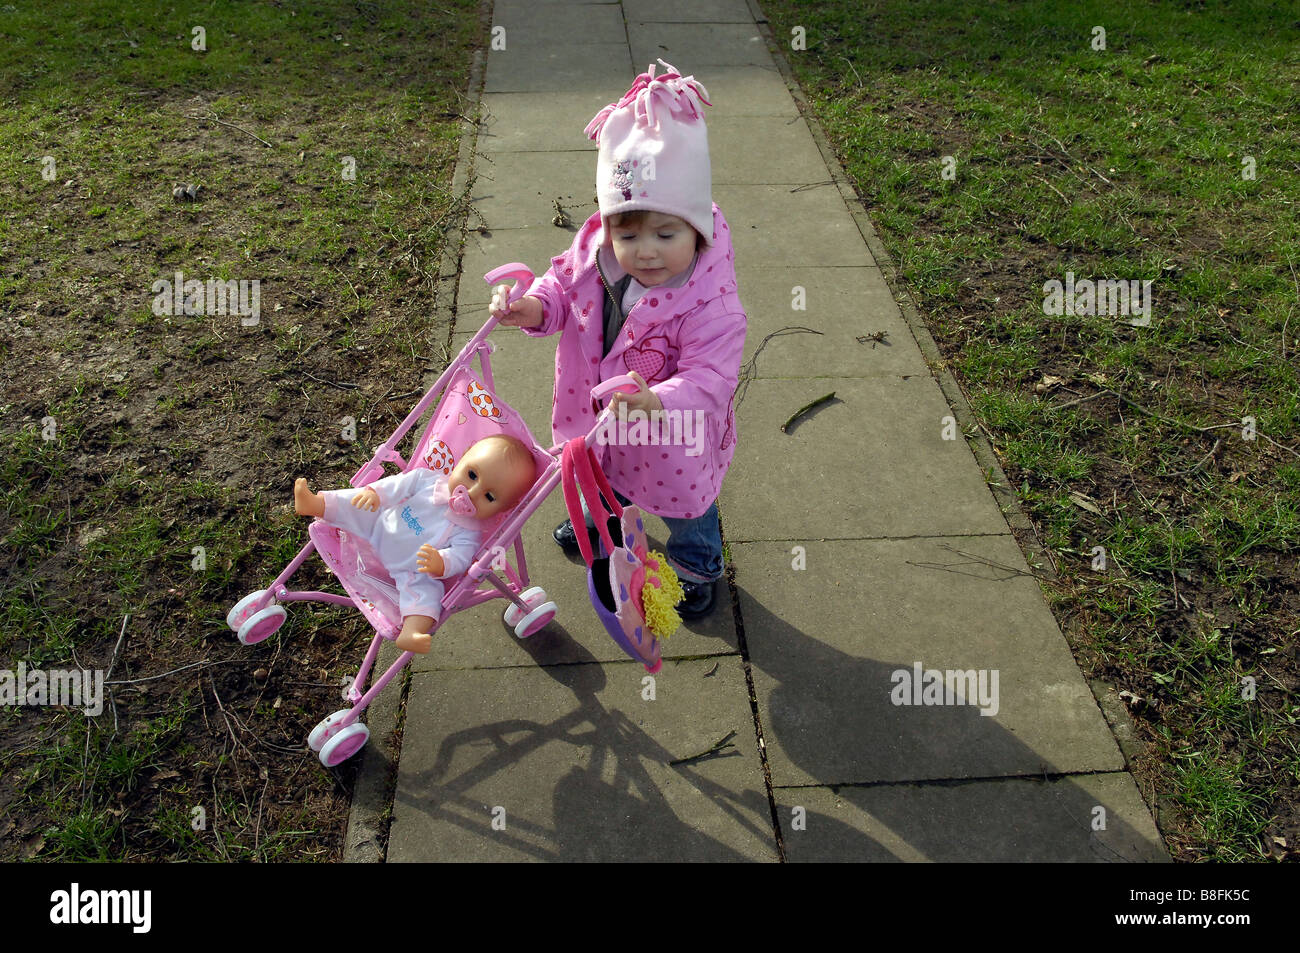 toddler girl pushing dolly in toy pram outside Stock Photo